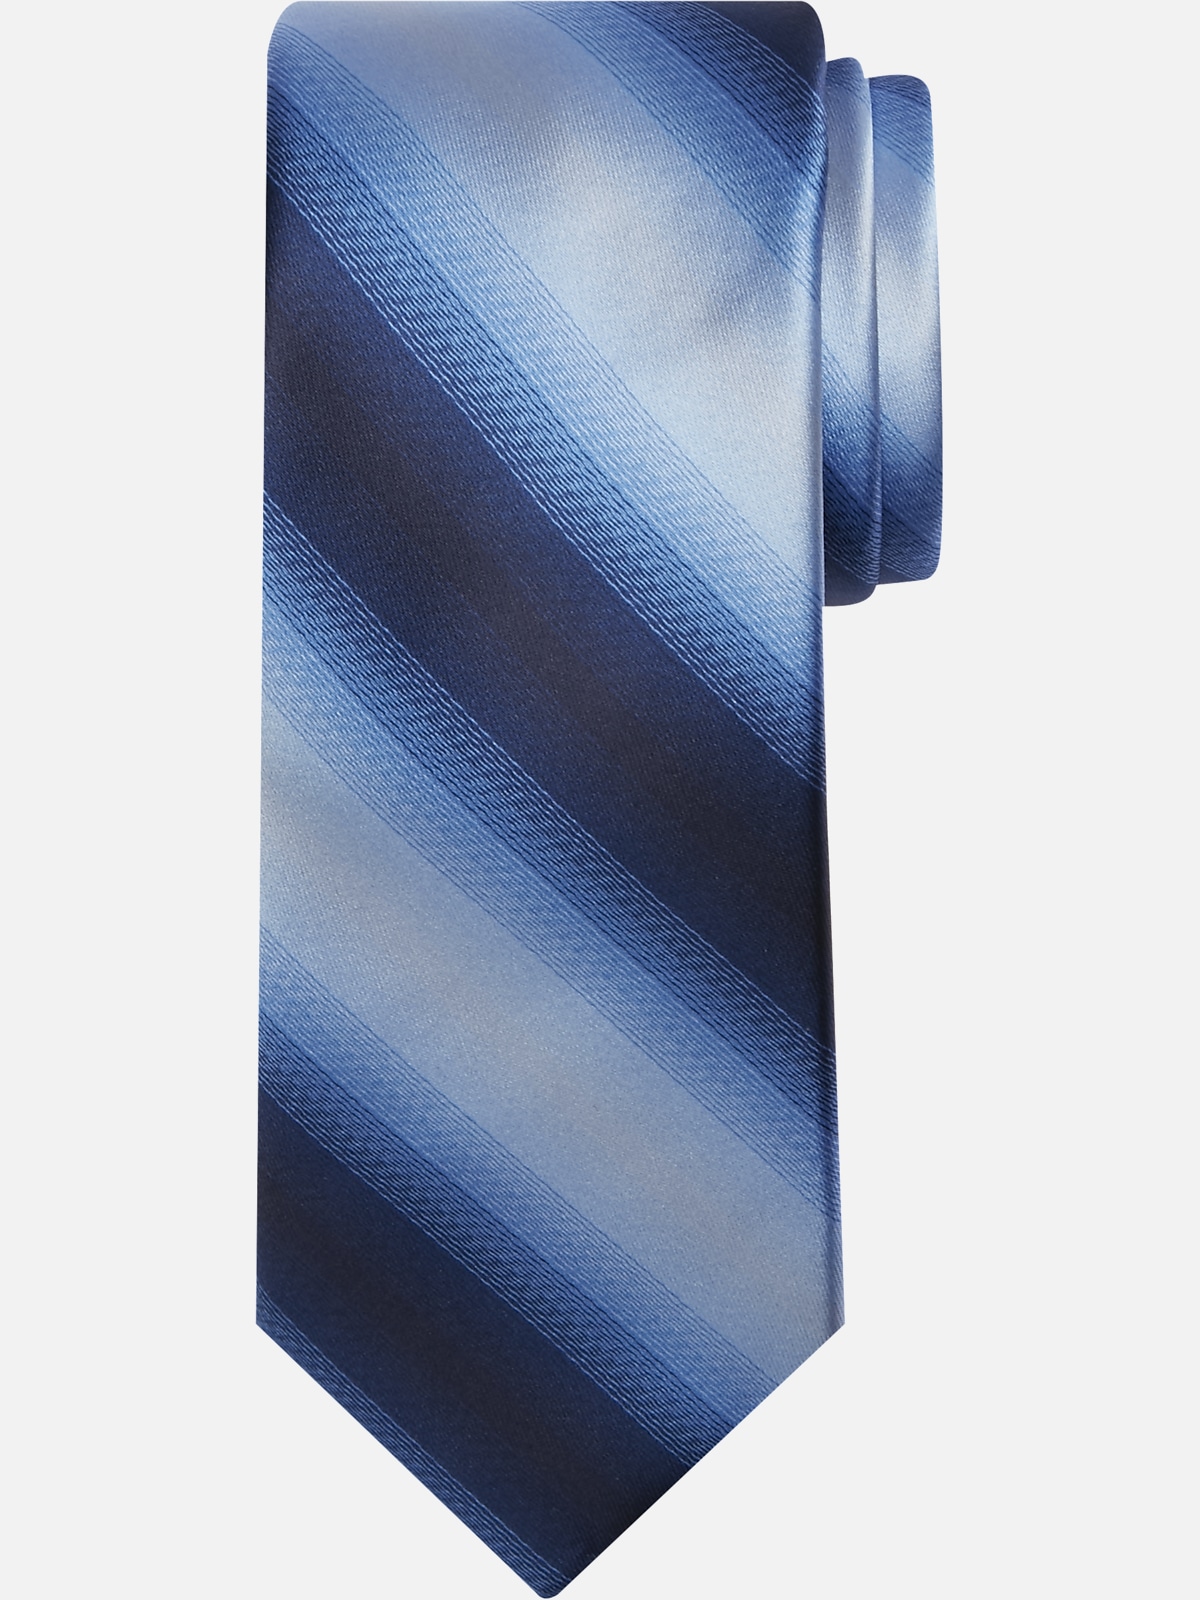 Egara Narrow Shaded Stripe Tie | All Clearance $39.99| Men's Wearhouse